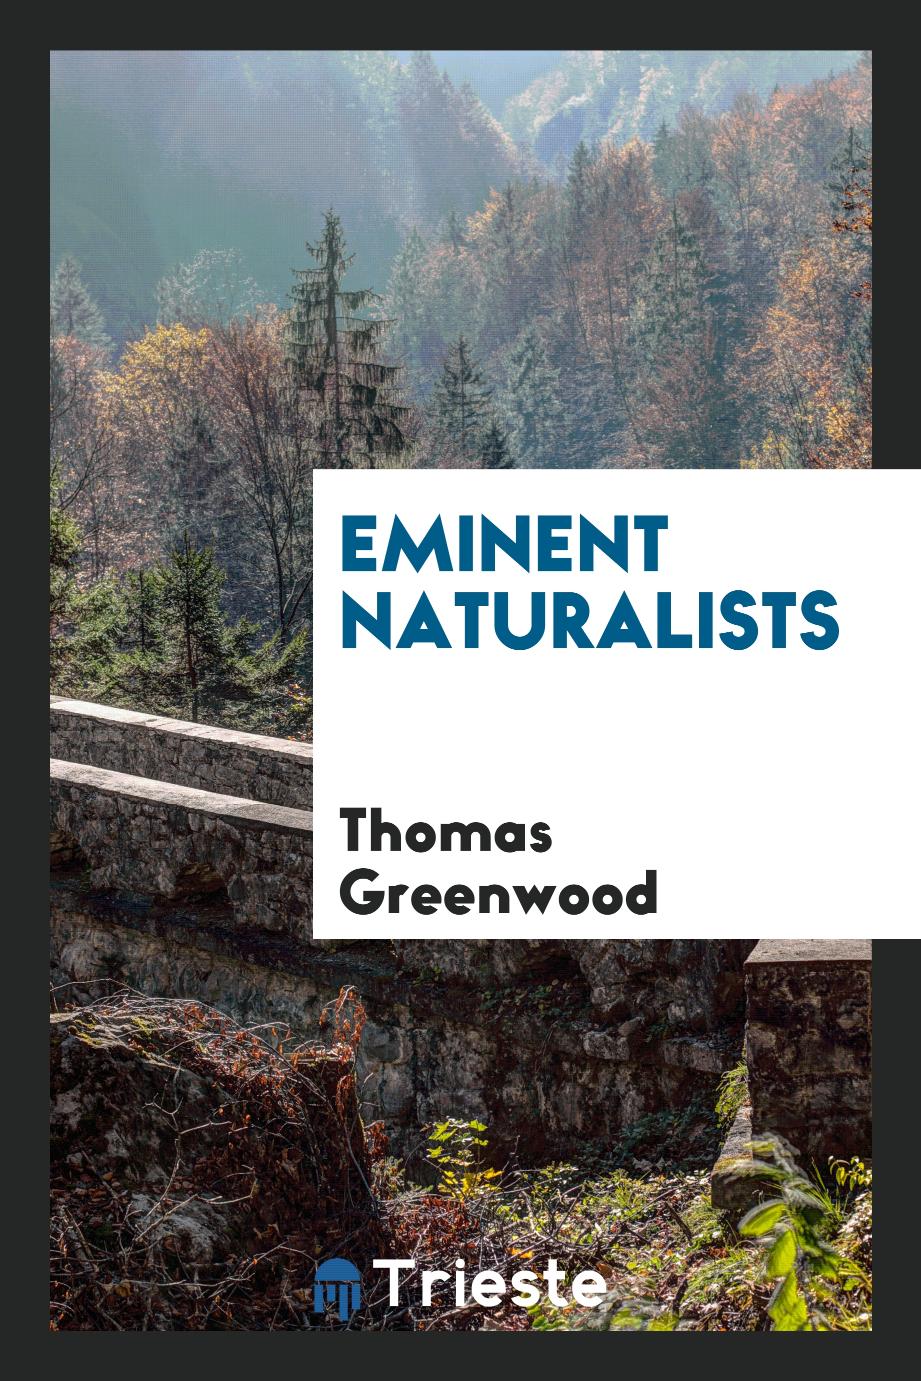 Eminent naturalists